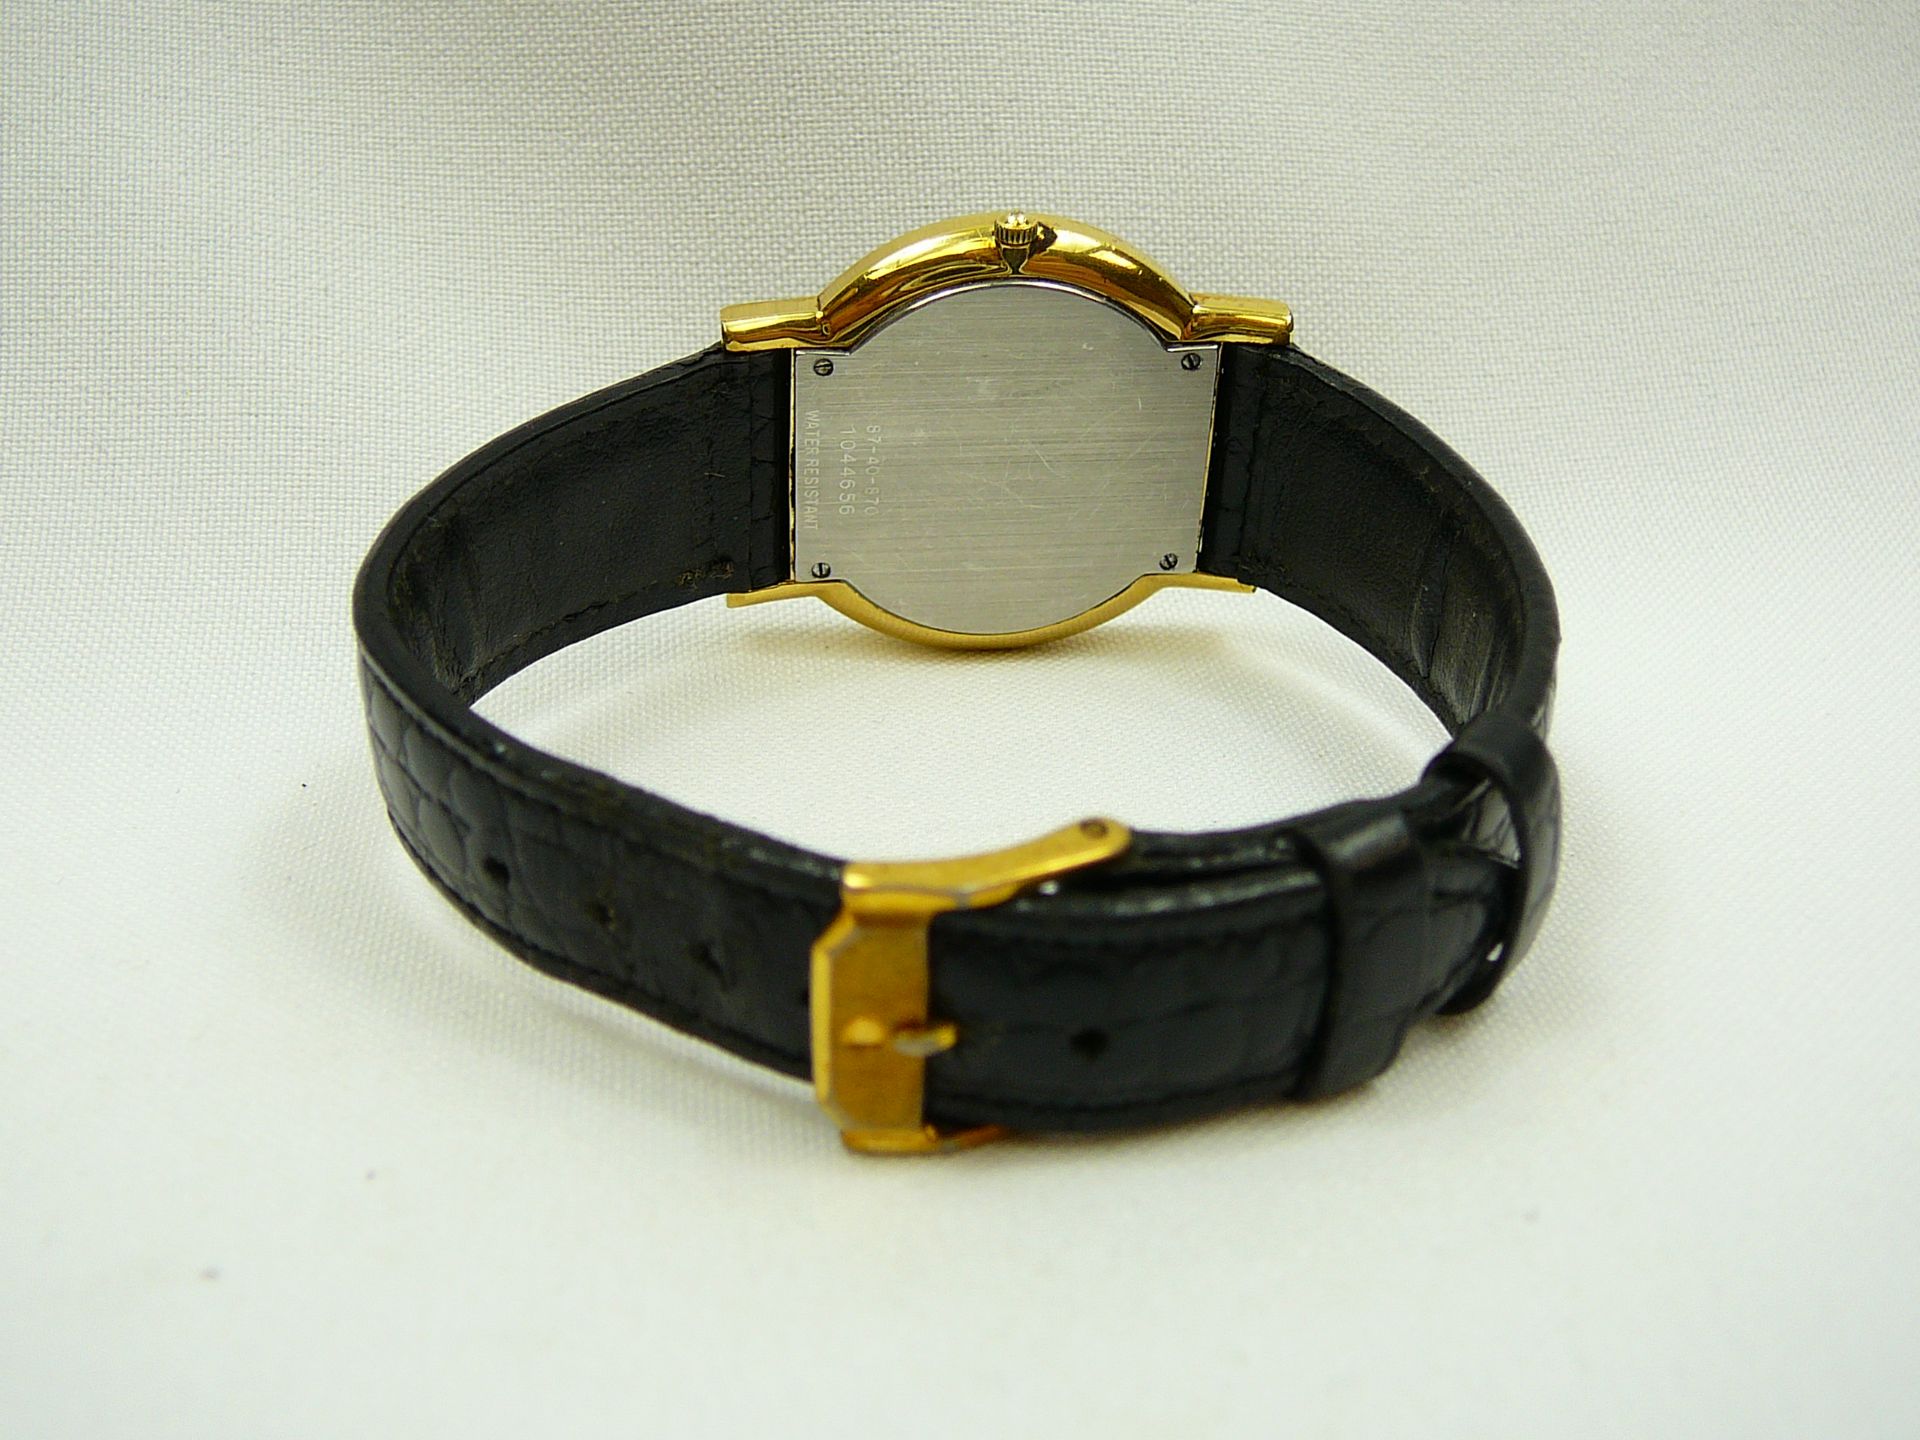 Gents Vintage Movado Wristwatch - Image 3 of 3